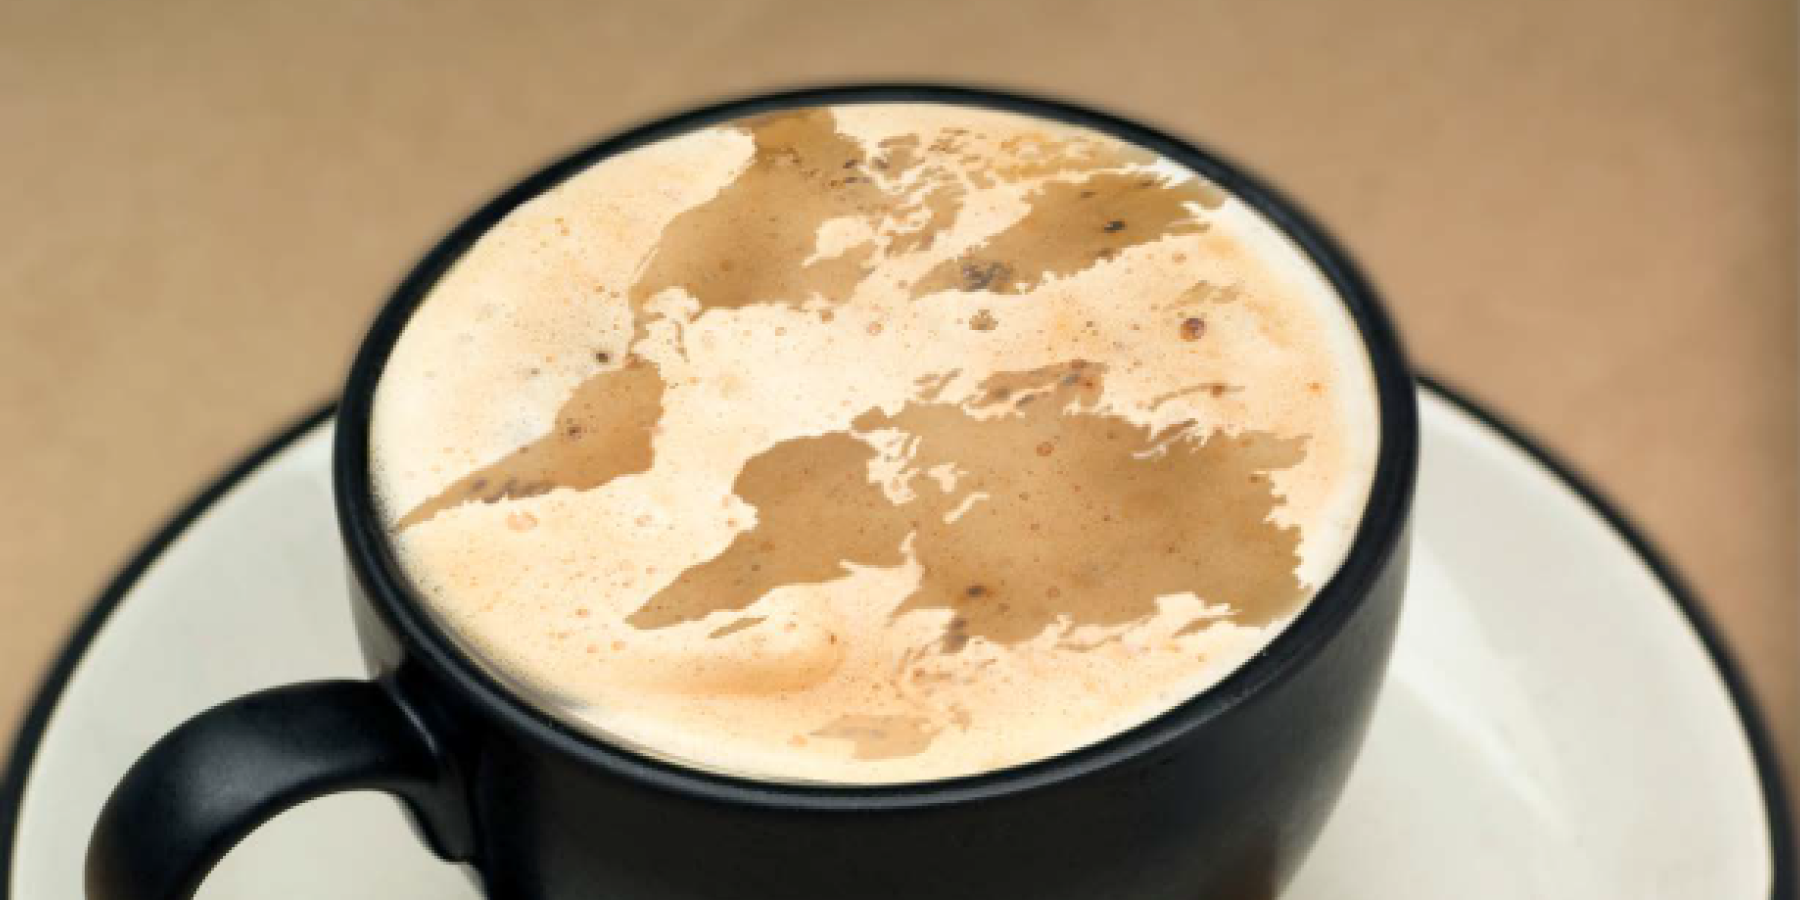 coffee cup with world shape foam